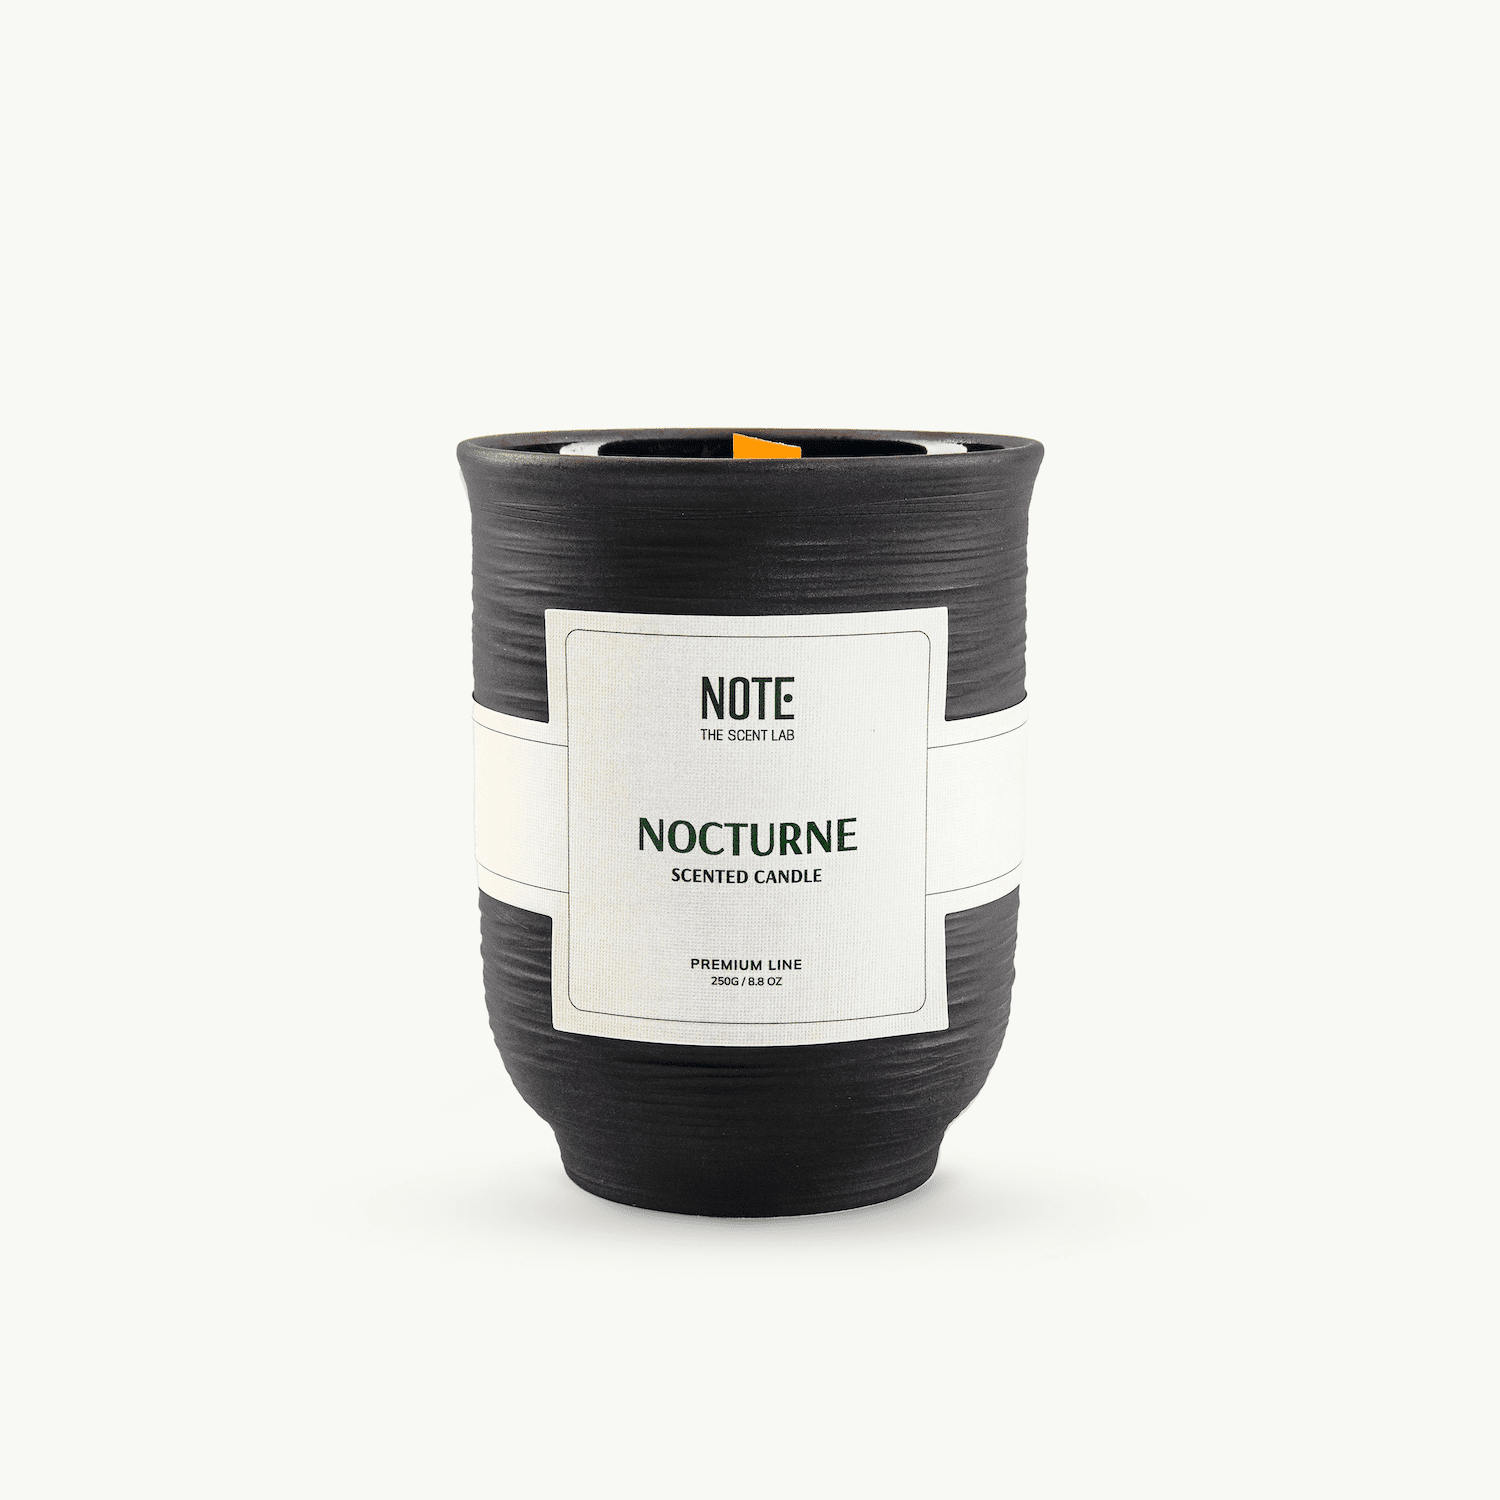 NẾN THƠM NOCTURNE - NOTE THE SCENT LAB - sản phẩm mùi hương từ NOTE - The Scent Lab